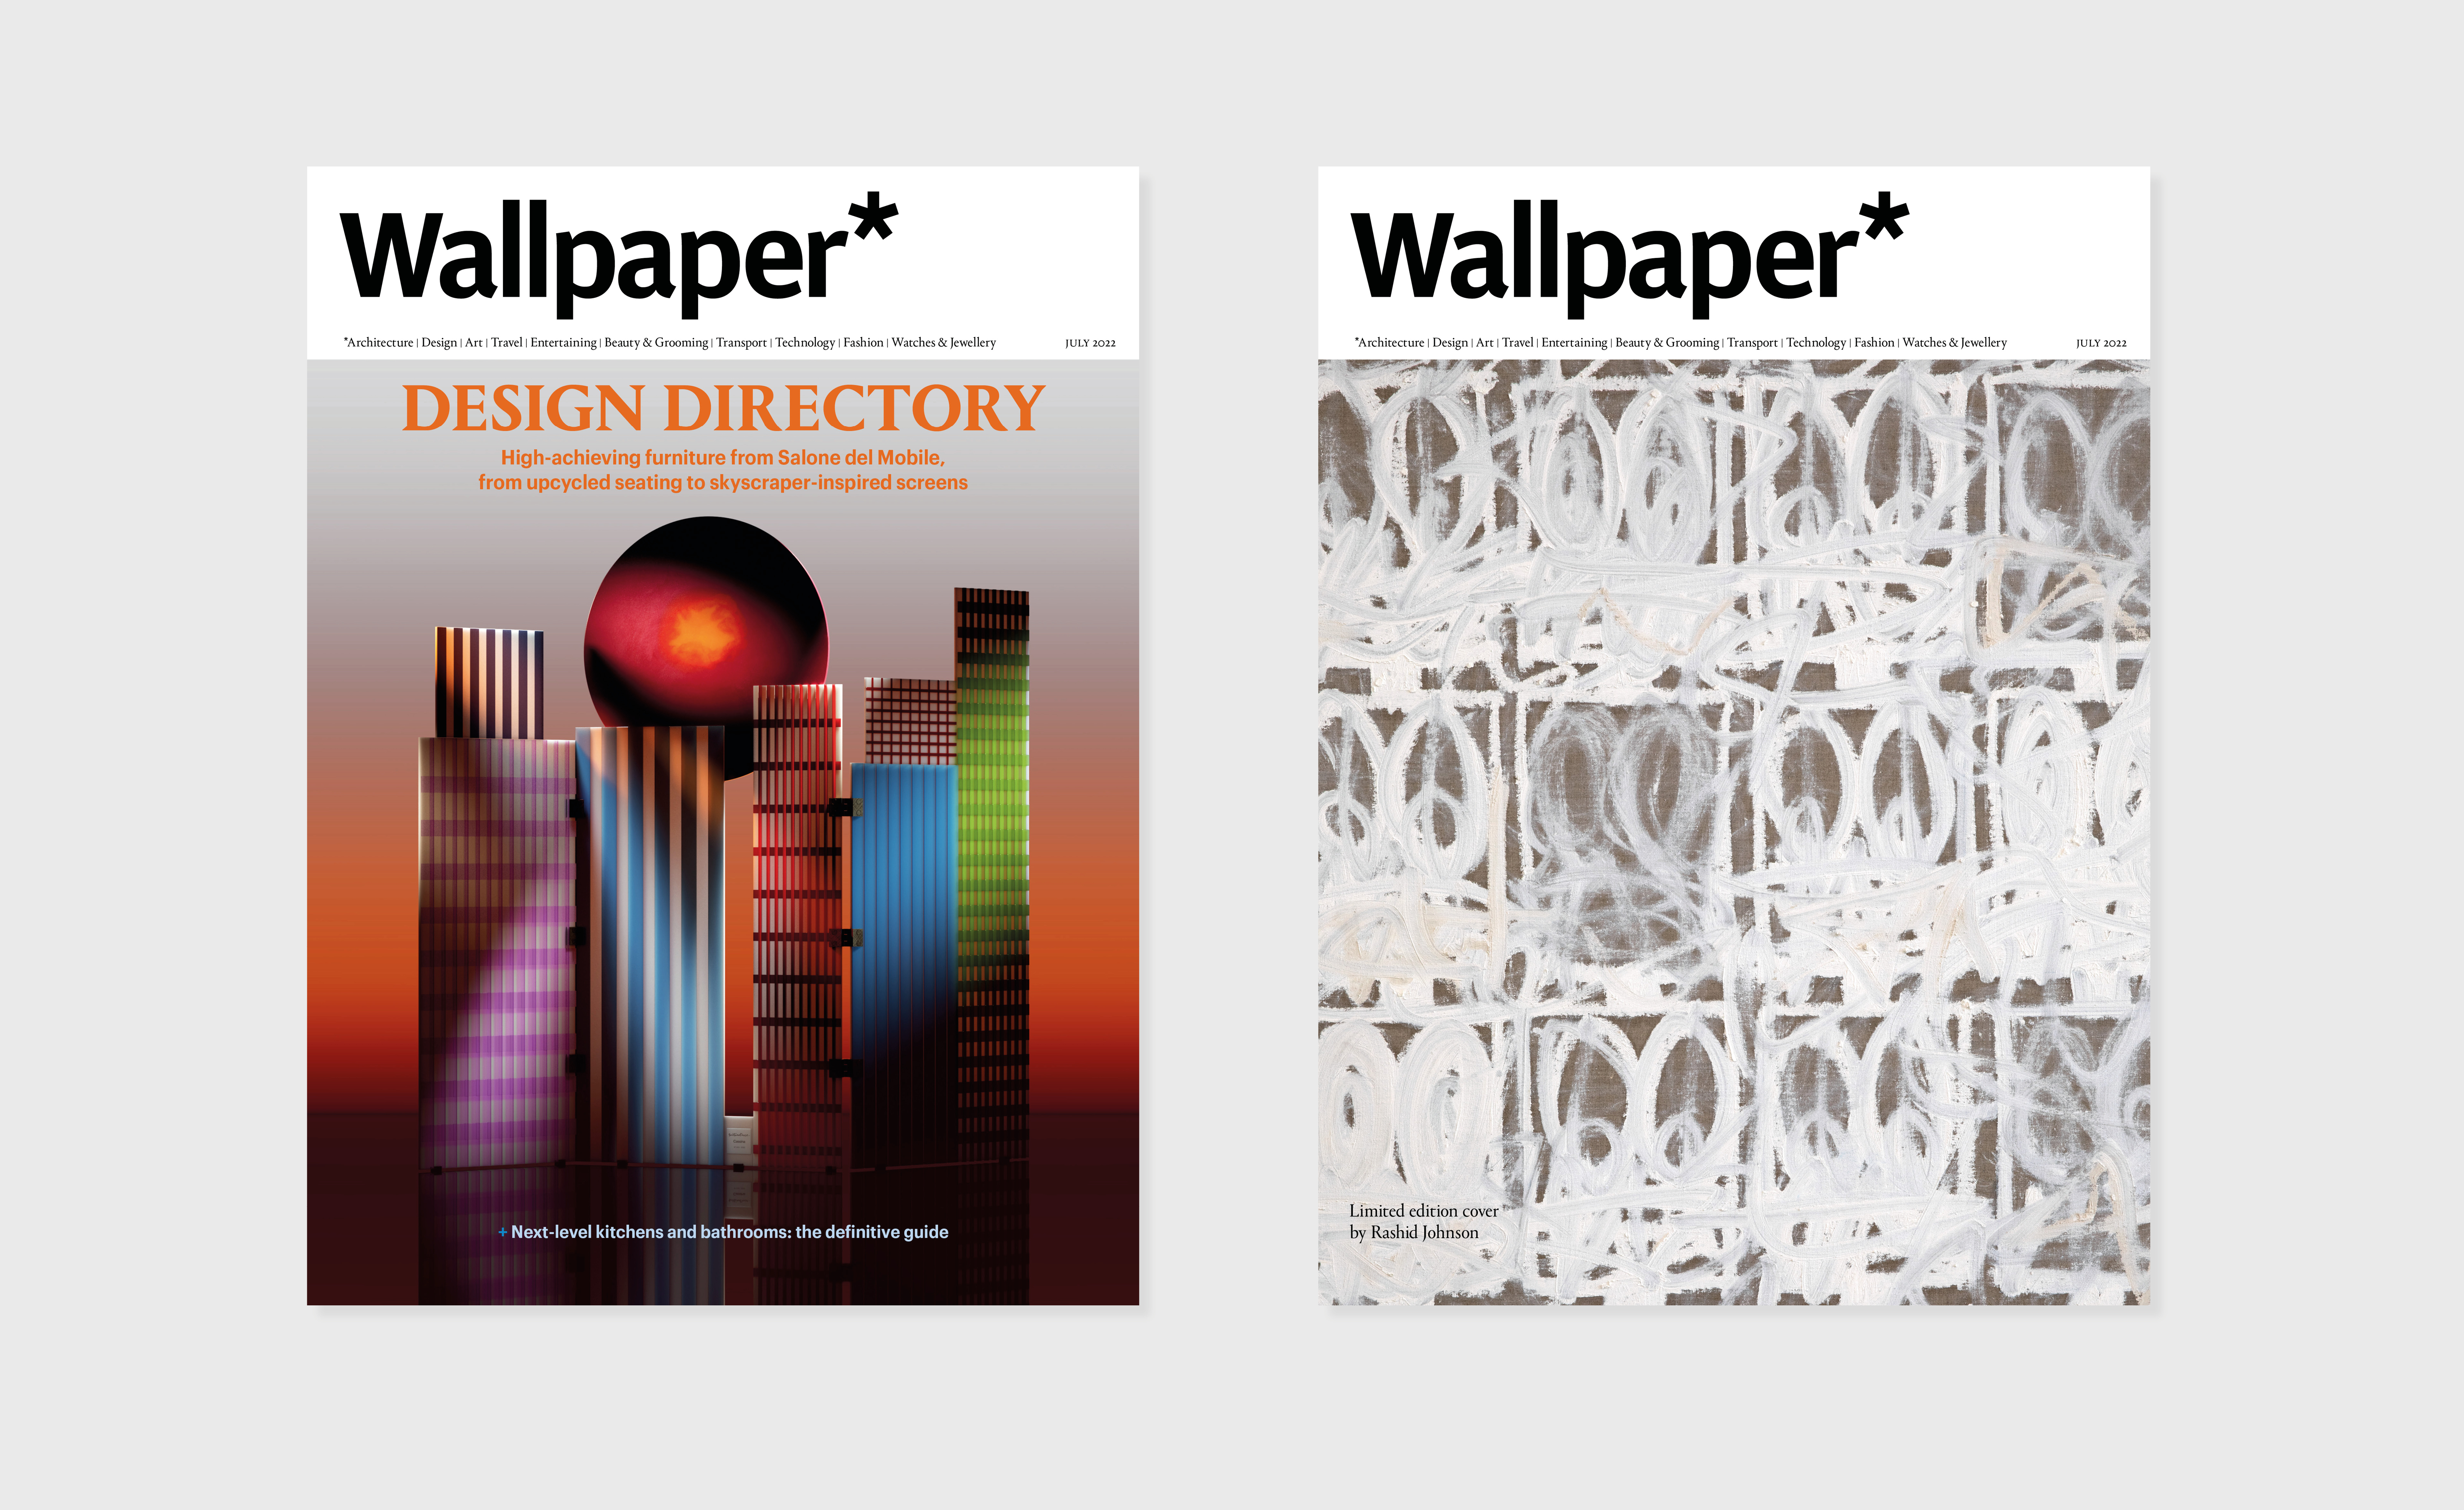 Expand Your Horizons June 2022 Desktop Wallpapers Edition  Smashing  Magazine